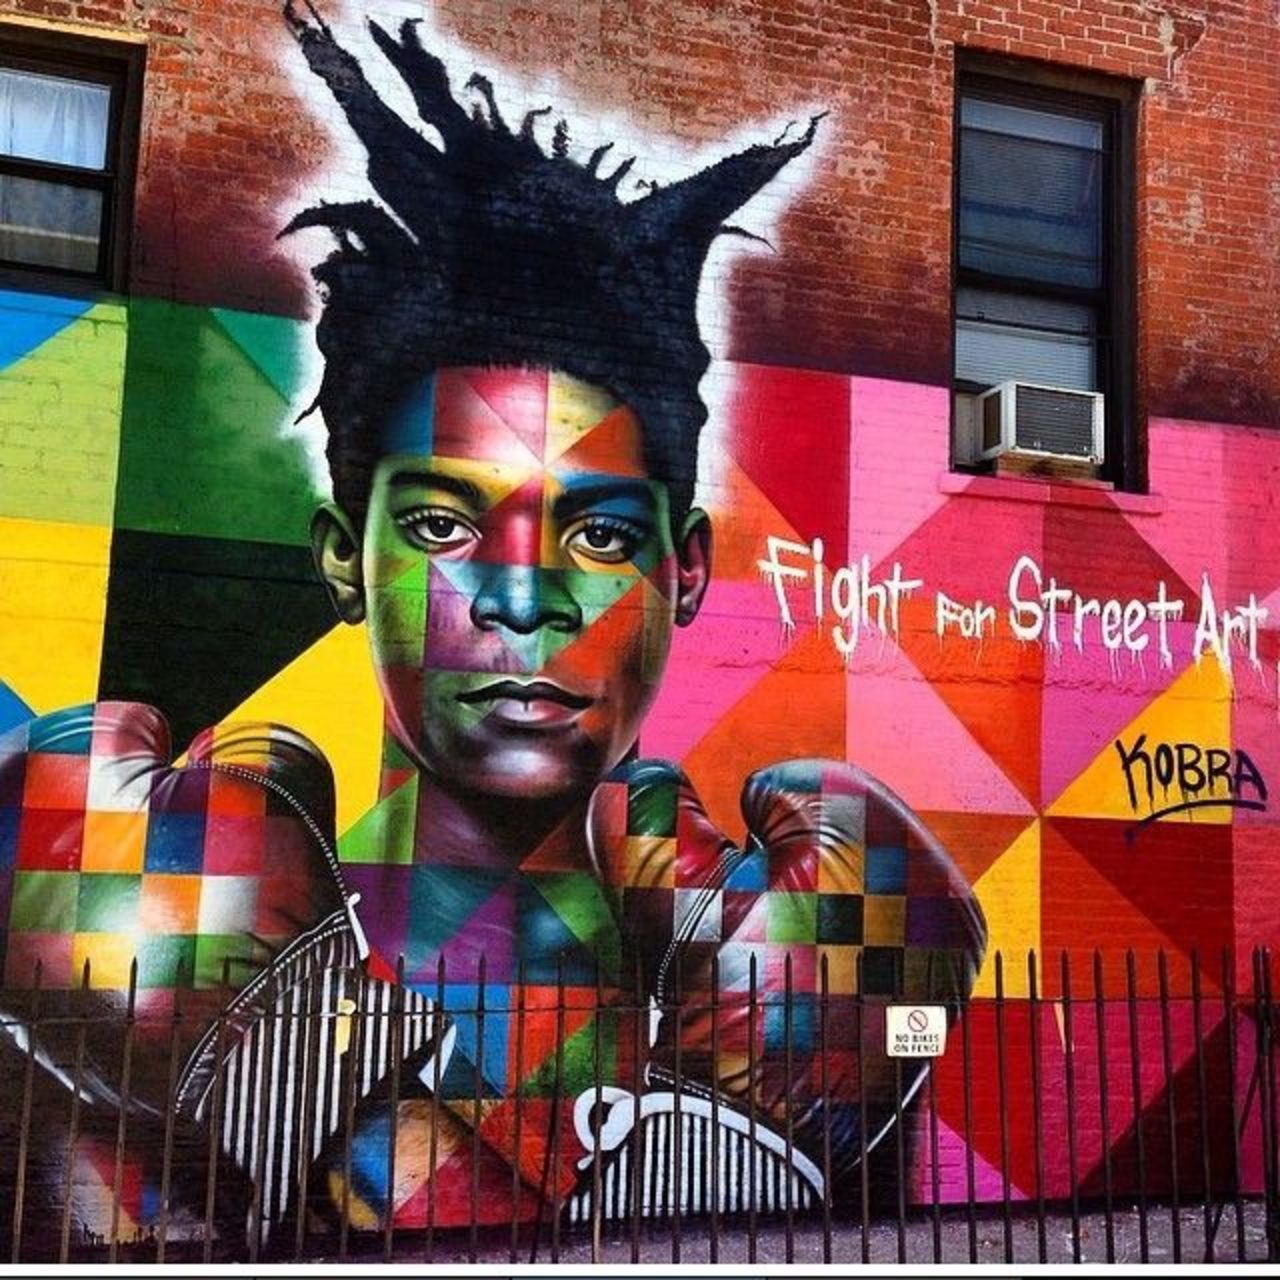 Jean Paul Basquiat by Eduardo Kobra in Brooklyn#streetart #mural #graffiti #art https://t.co/tyvqizE6Rt